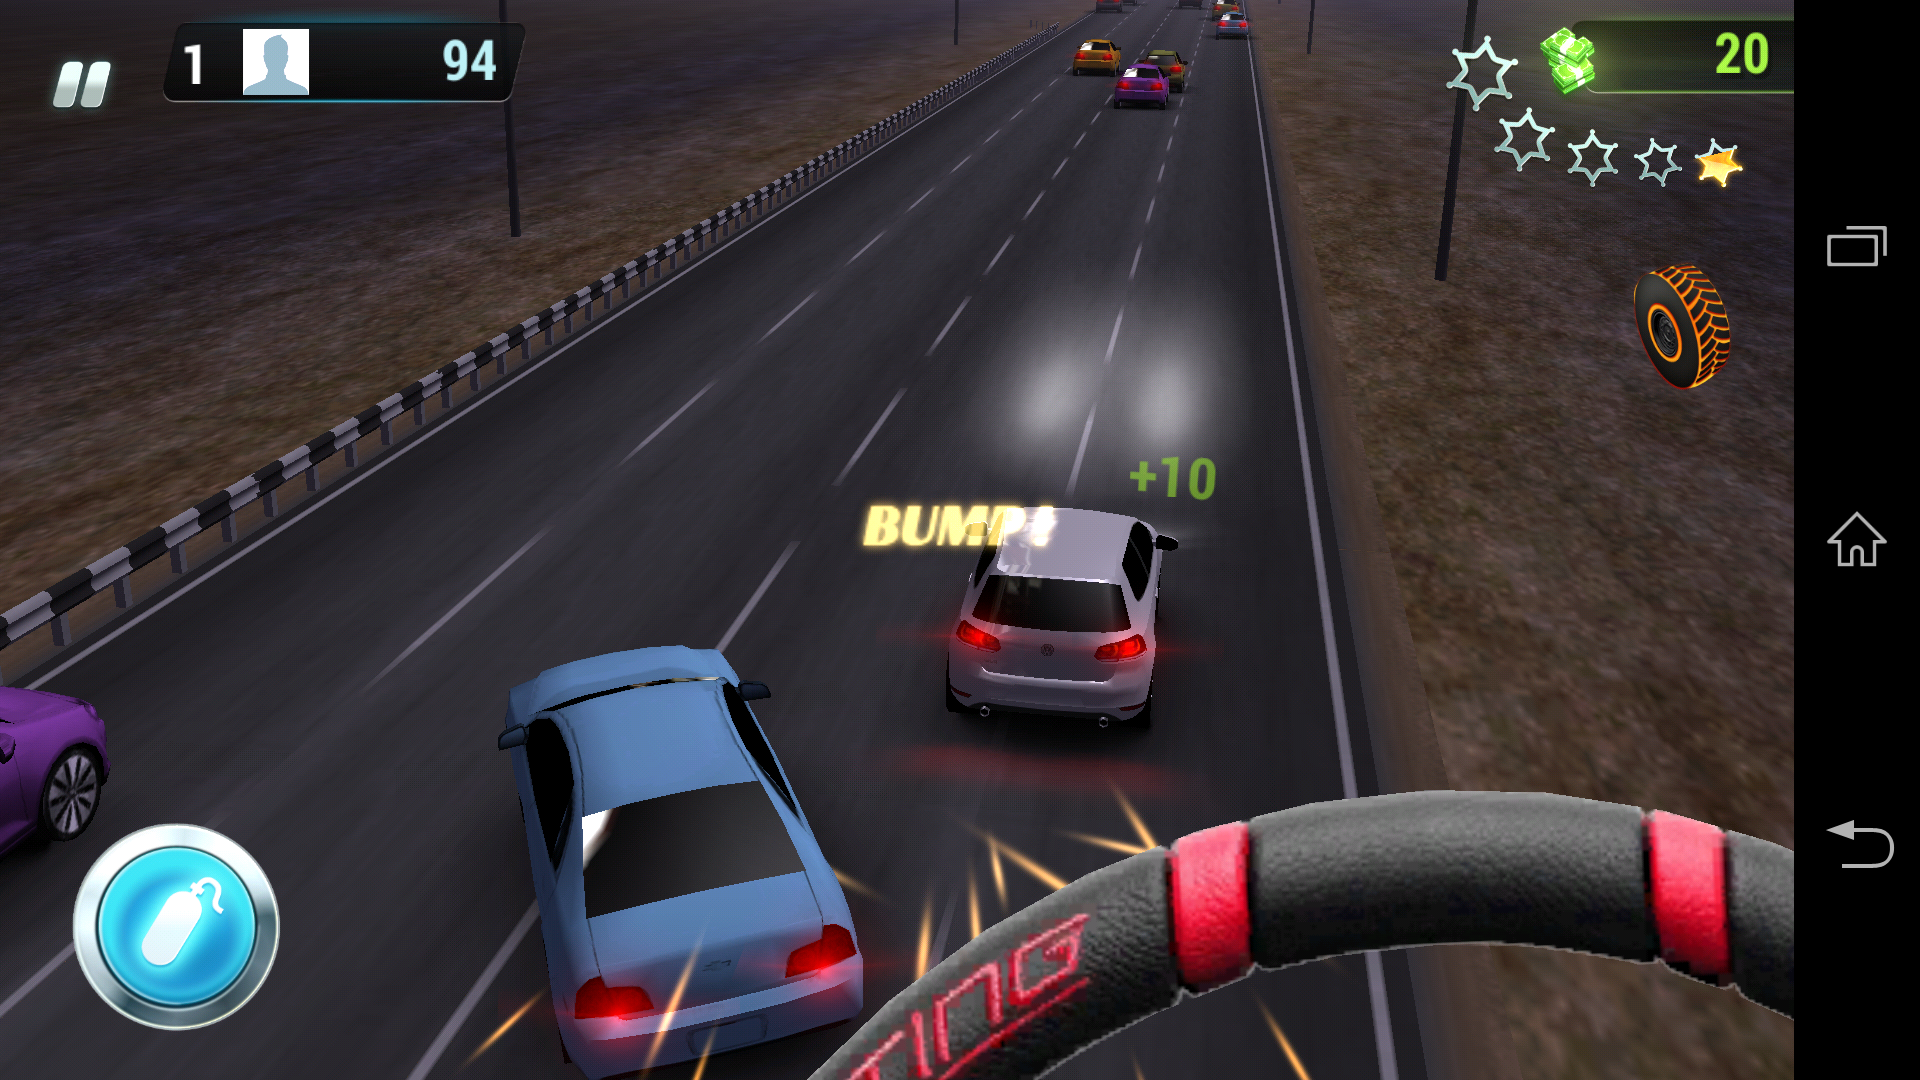 Mp3 mod apk. Игра Smash Road. Smash Road гонка. Андроид игра Road Smash Crazy Racing. Road Smash: Crazy Racing — грязные гонки.